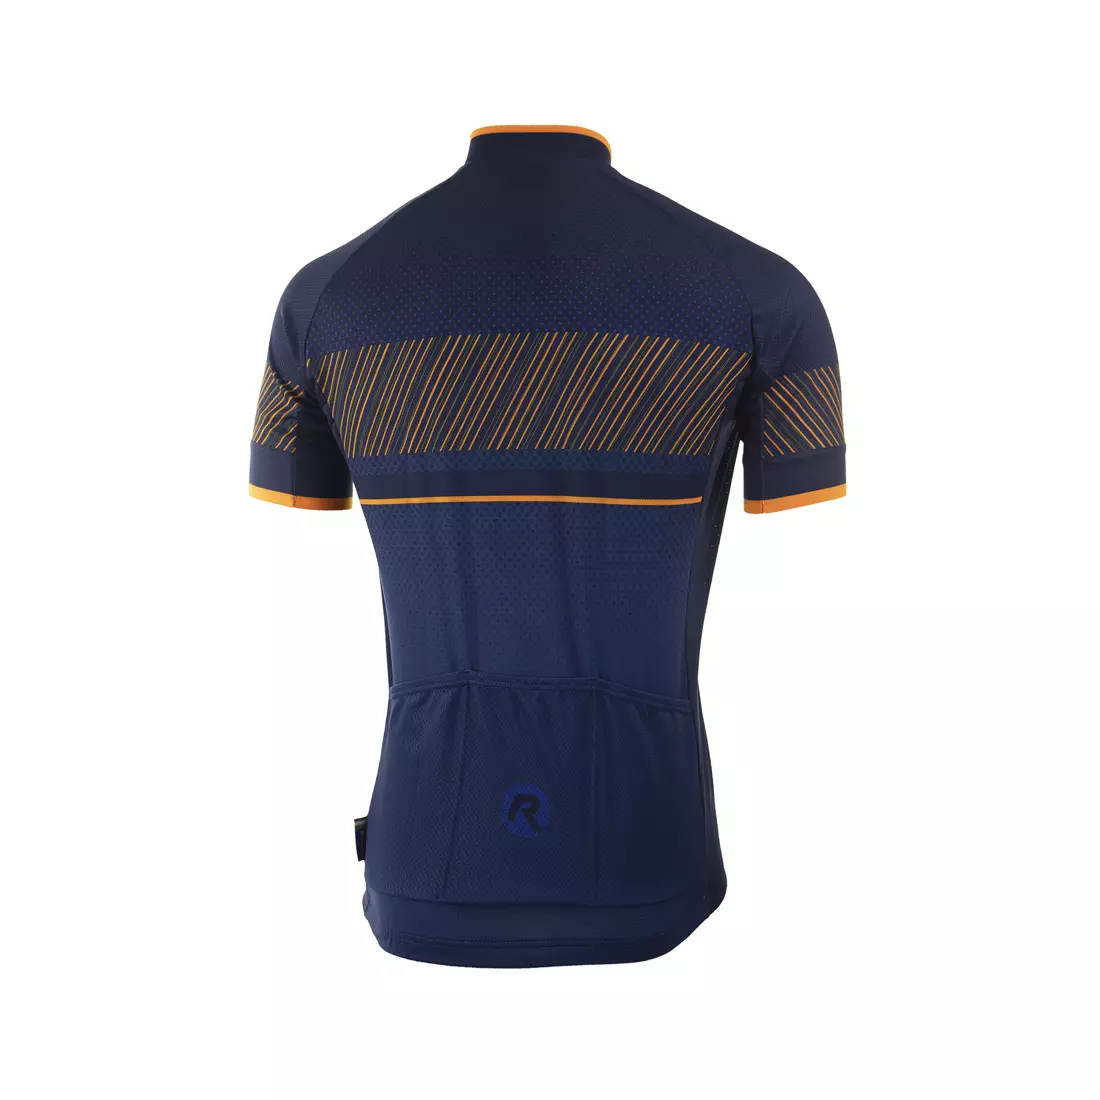 ROGELLI RITMO Bike T-shirt navy blue orange